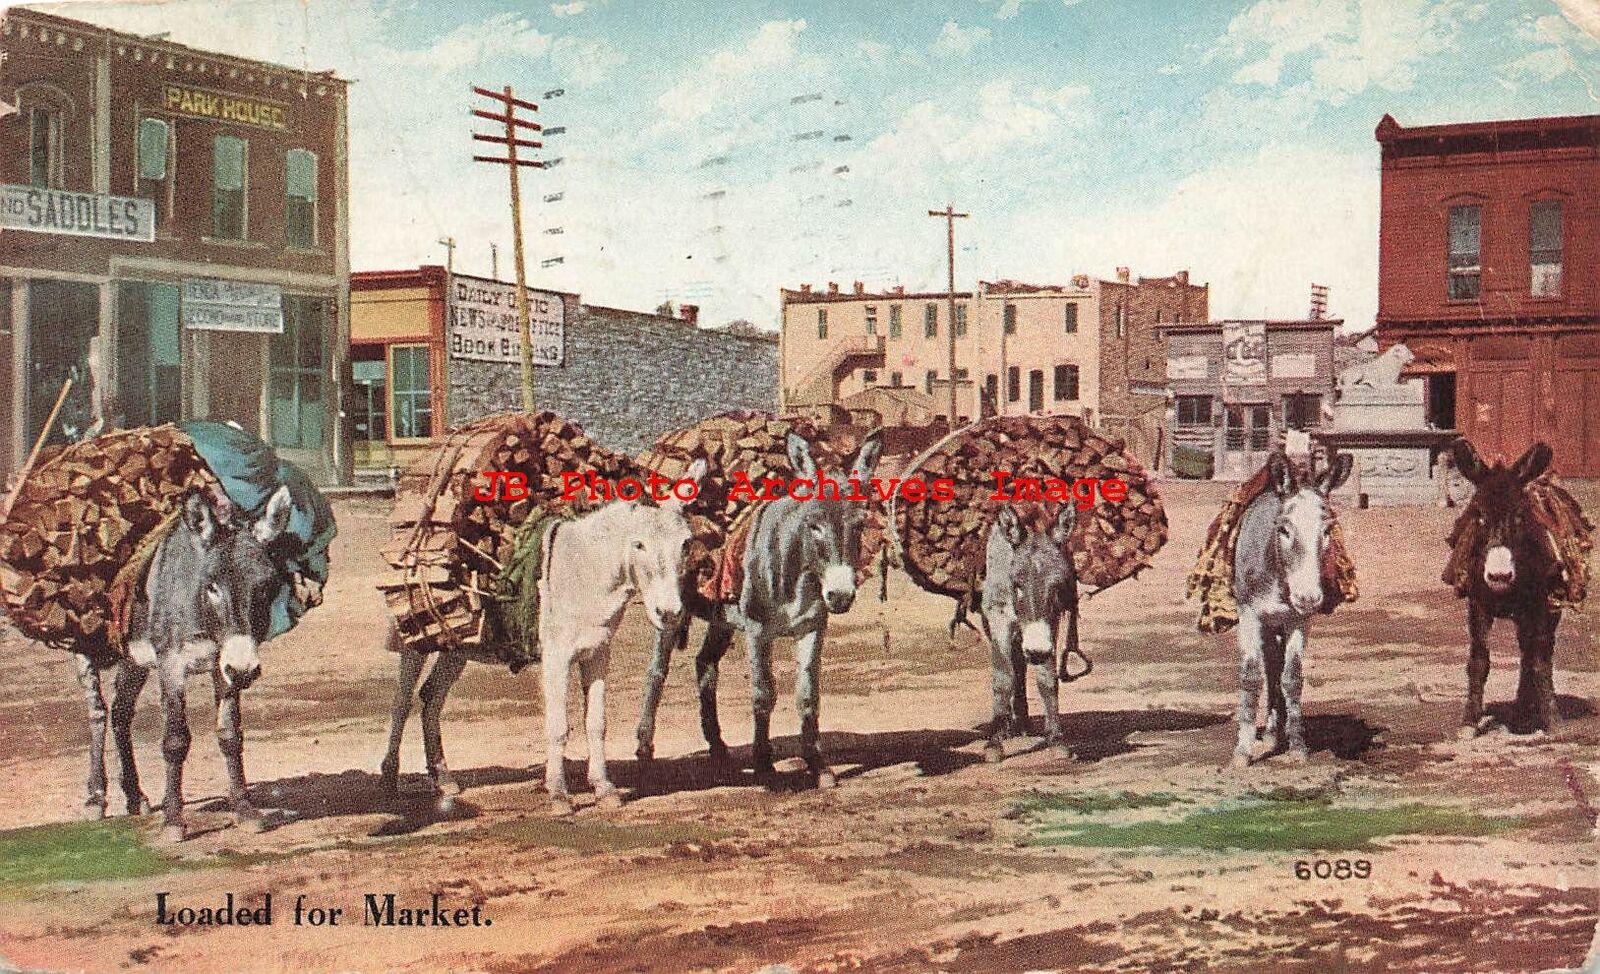 CO, Colorado Springs, Colorado, Mules Loaded For Market, 1913 PM, No 6089